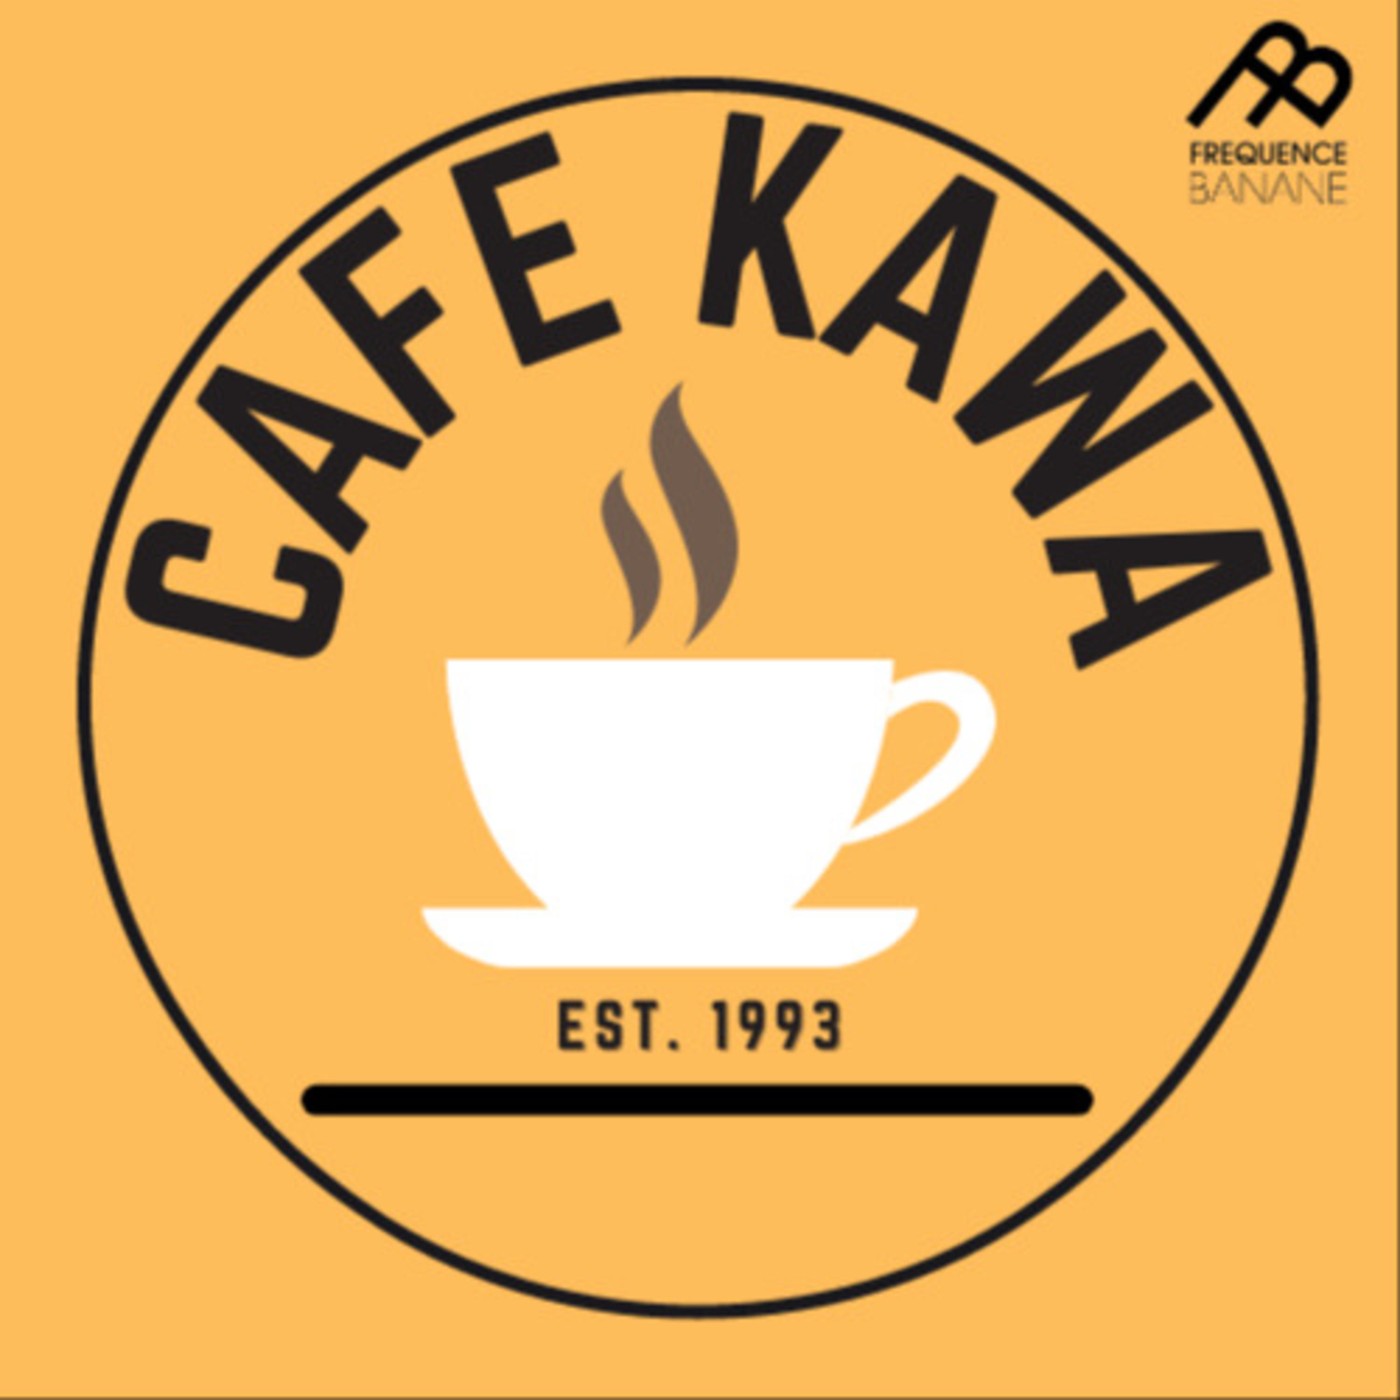 Café Kawa du jeudi 18.03.21